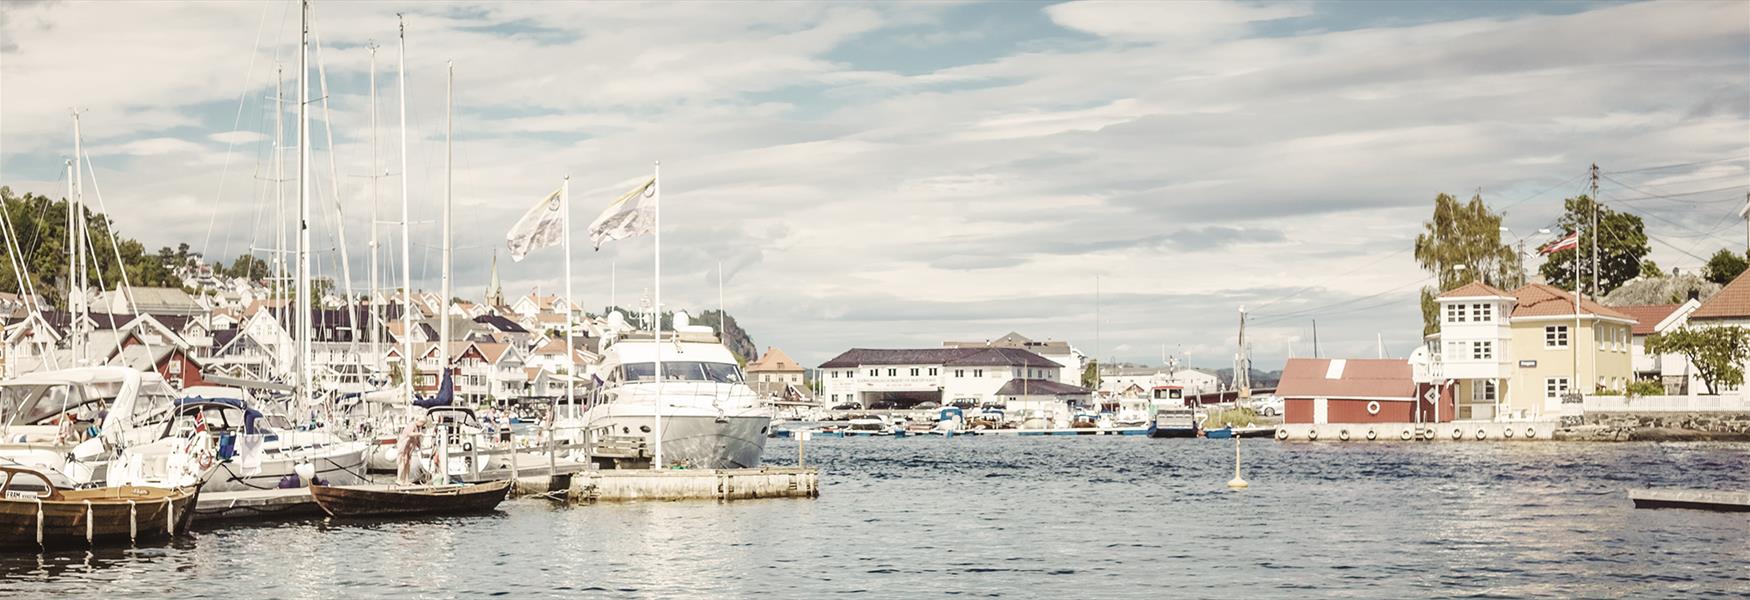 båthavn i Kragerø